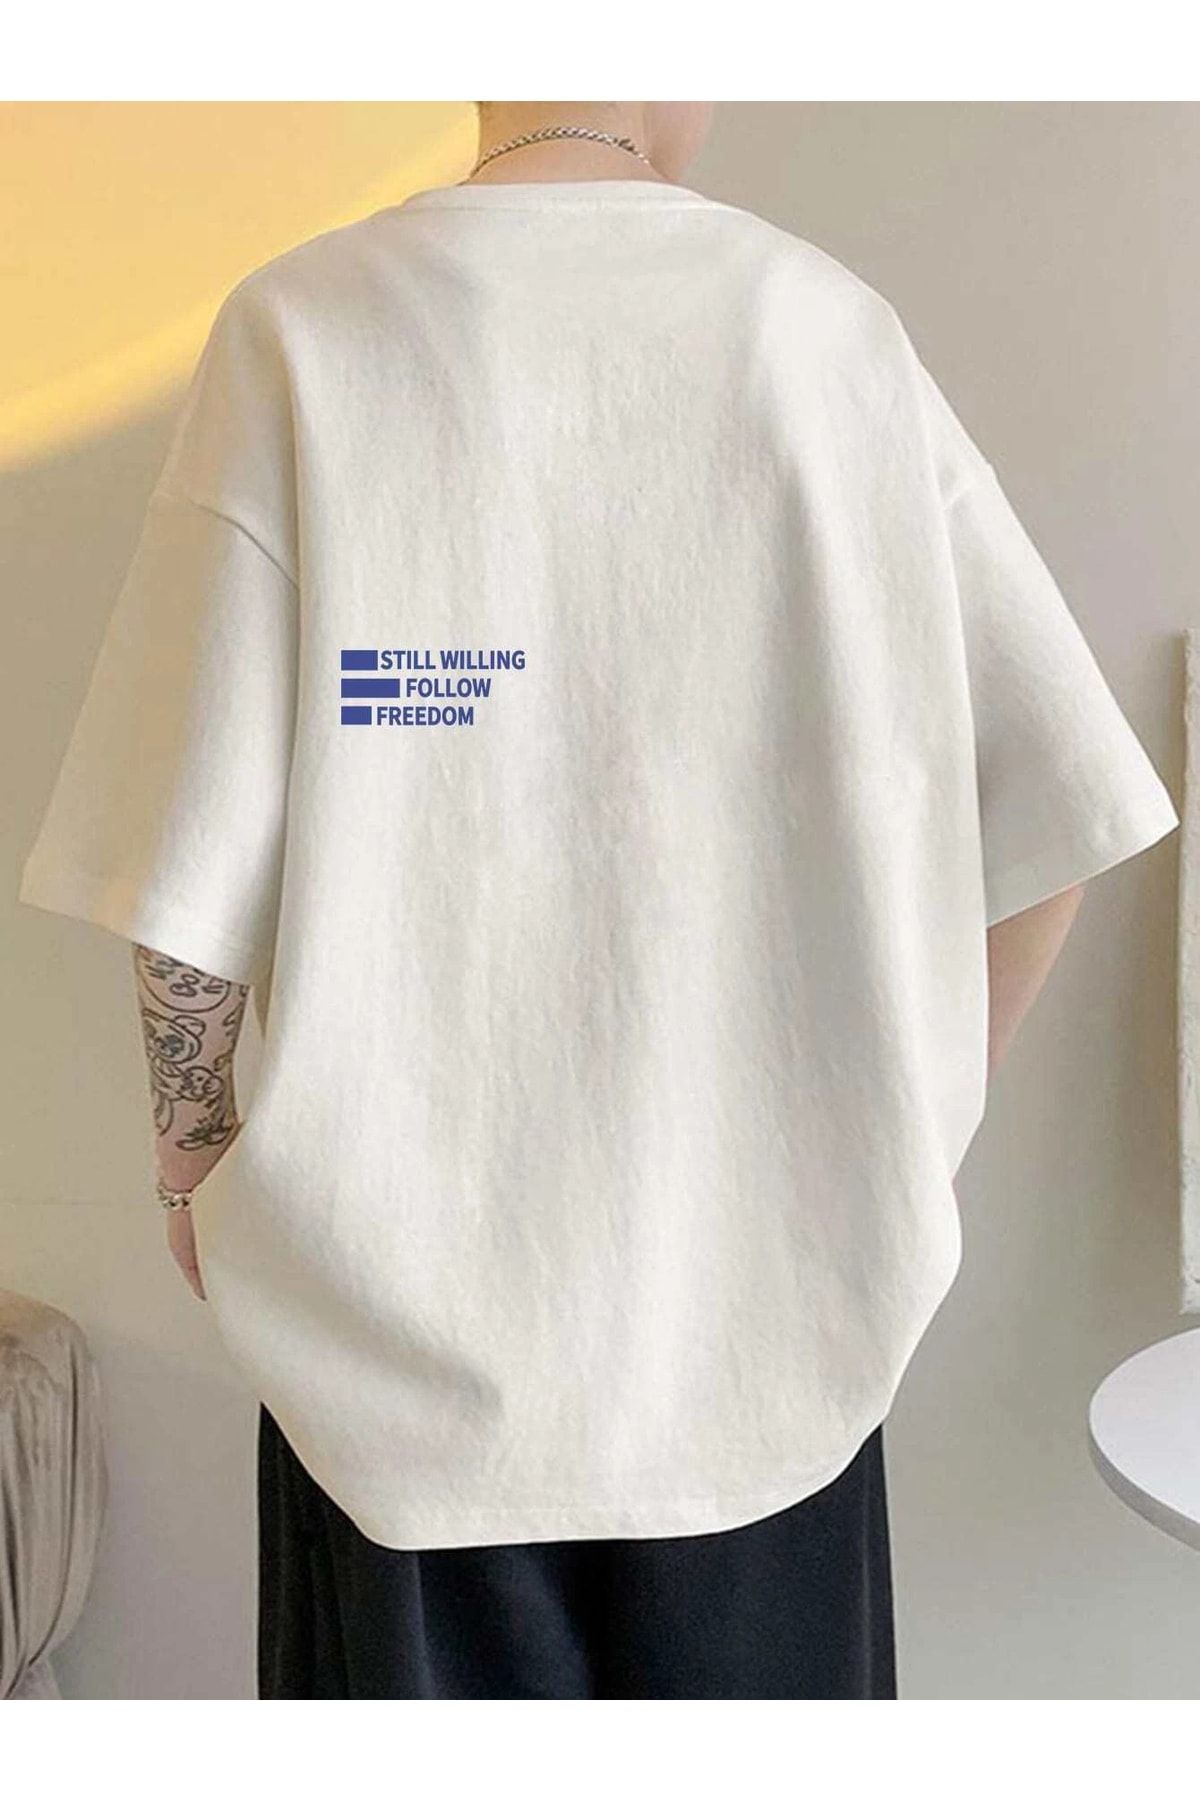 VBSVİBES Unisex Beyaz Oversiz Still Follow Freedom Baskılı Örme T-shirt